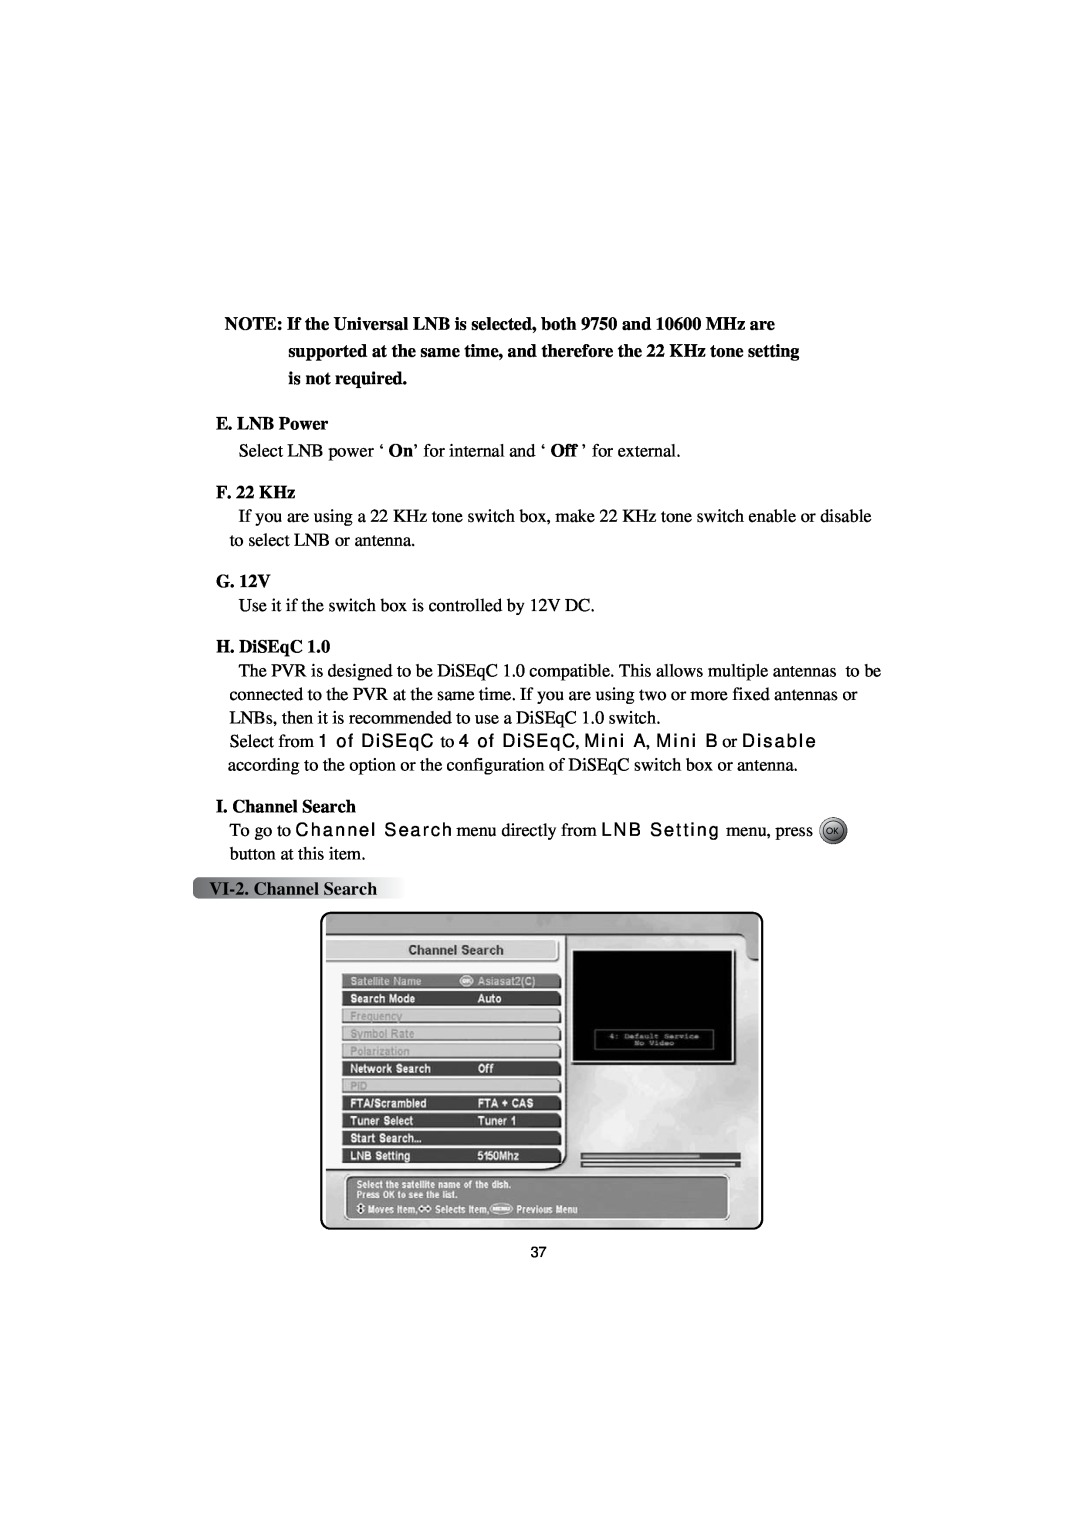 Topfield TF4000PVR CoCI manual E. LNB Power, F. 22 KHz, H. DiSEqC, I. Channel Search, VI-2. Channel Search 